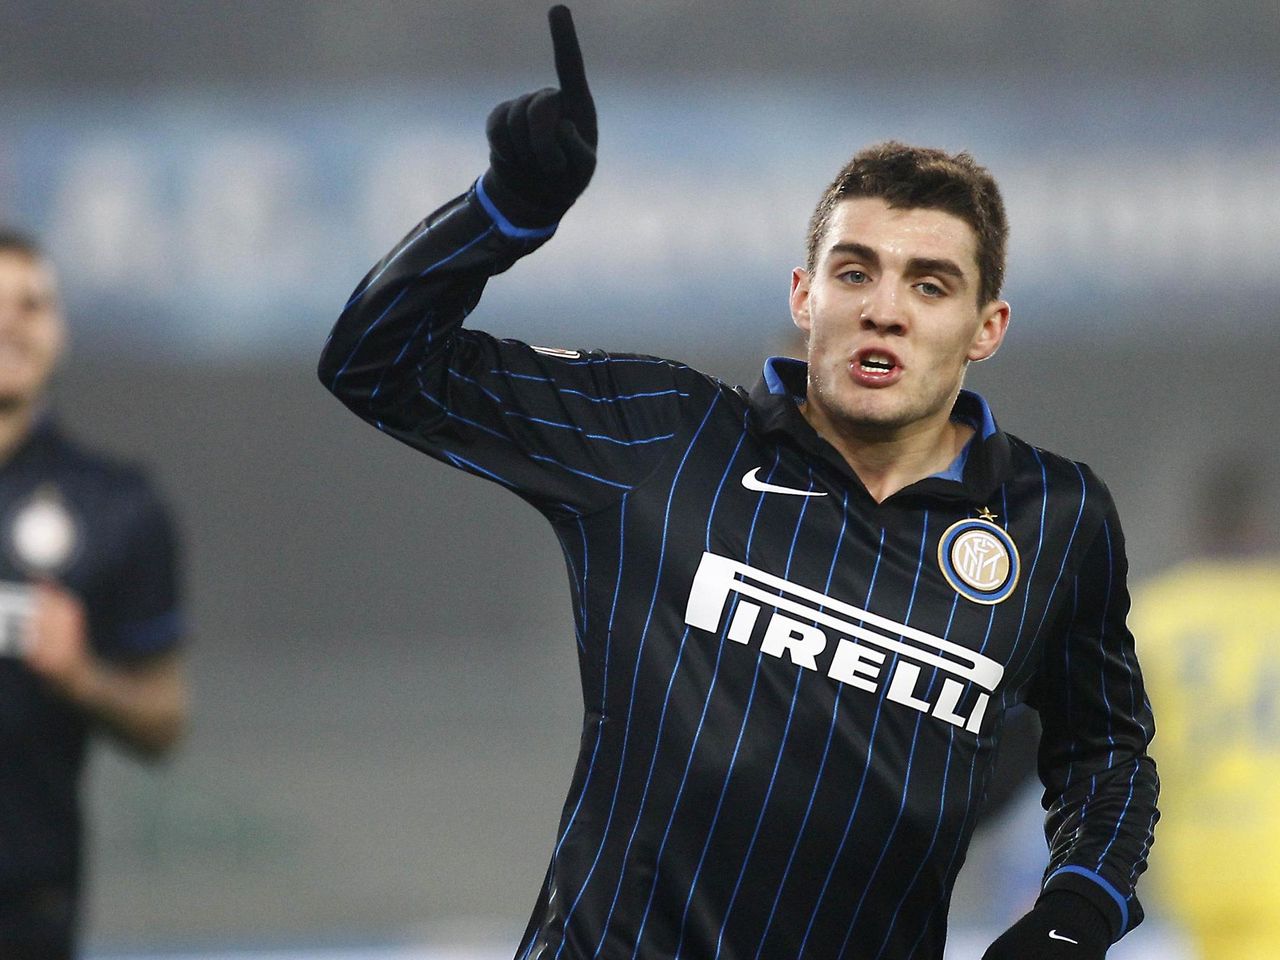 Christian Verhoog jezelf Maak een sneeuwpop Roberto Mancini's Inter Milan climb table with win at Chievo - Eurosport